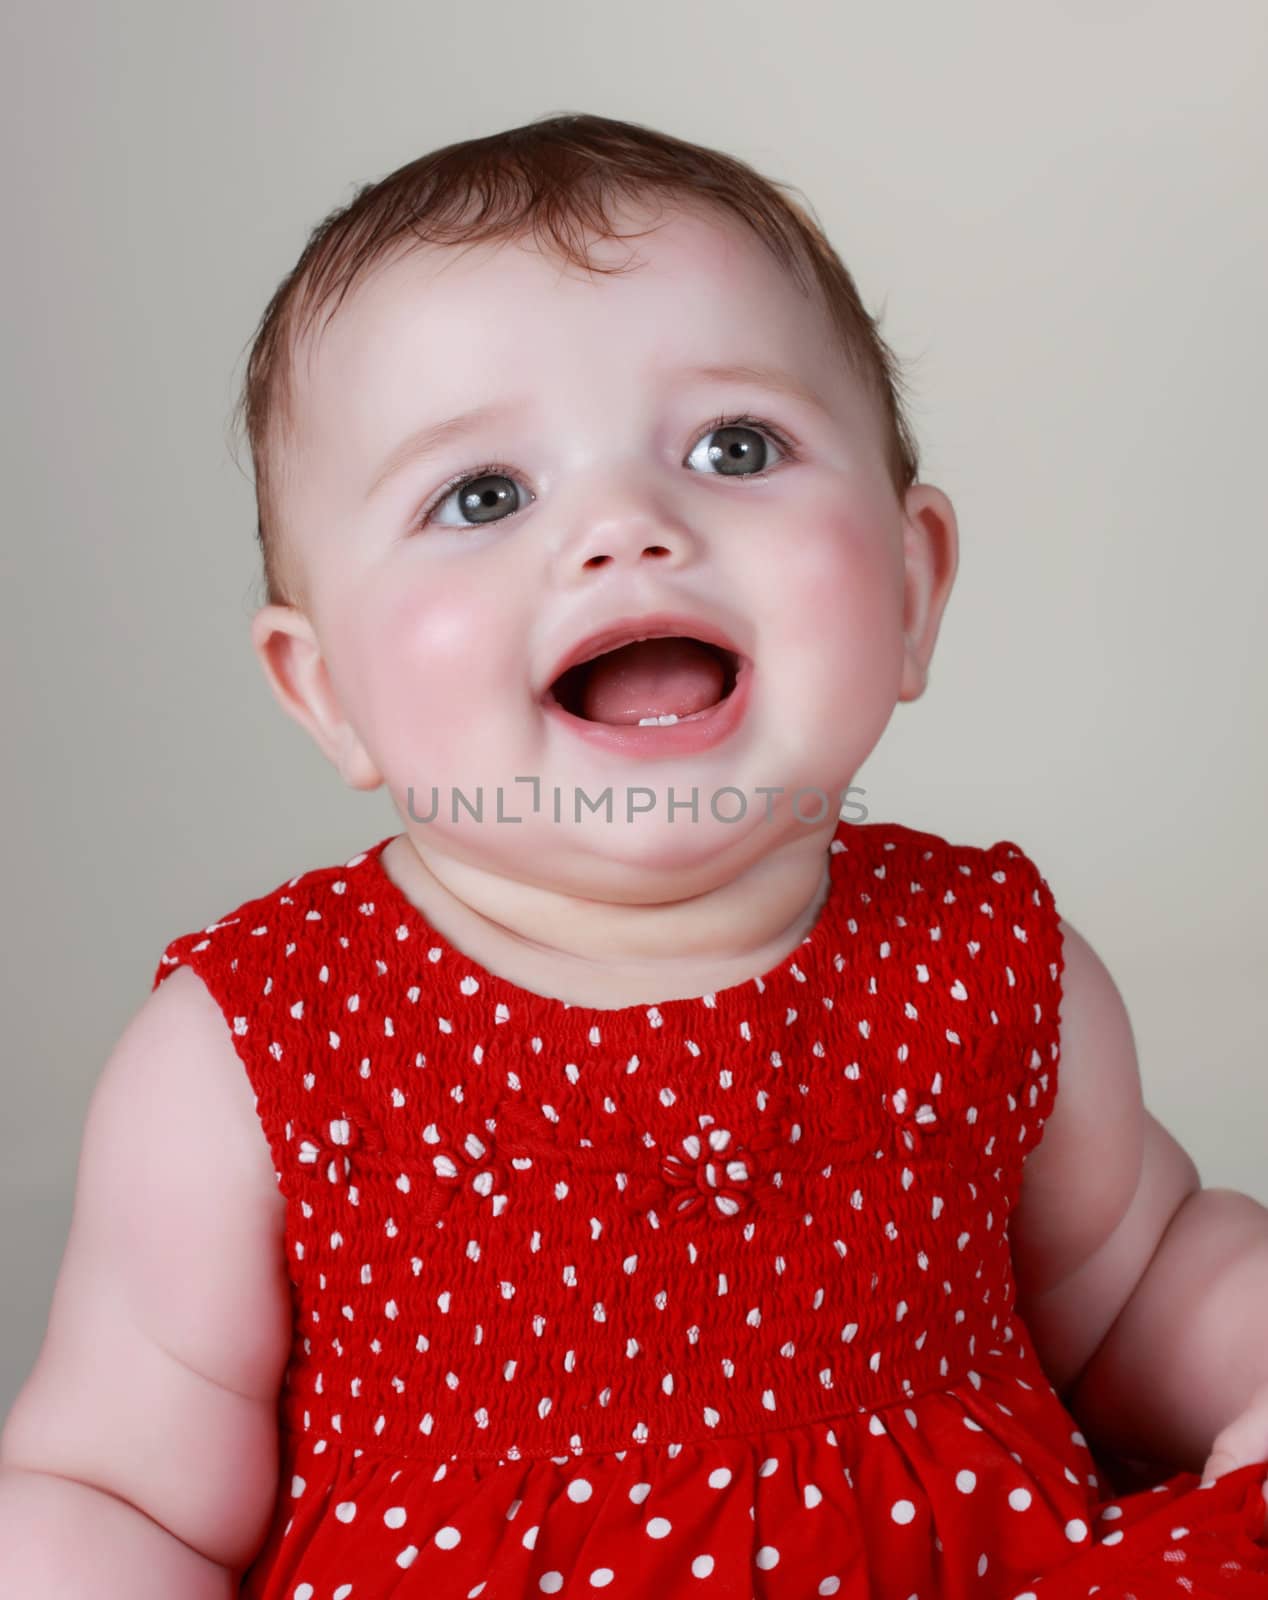 portrait of a cute happy caucasian baby girl